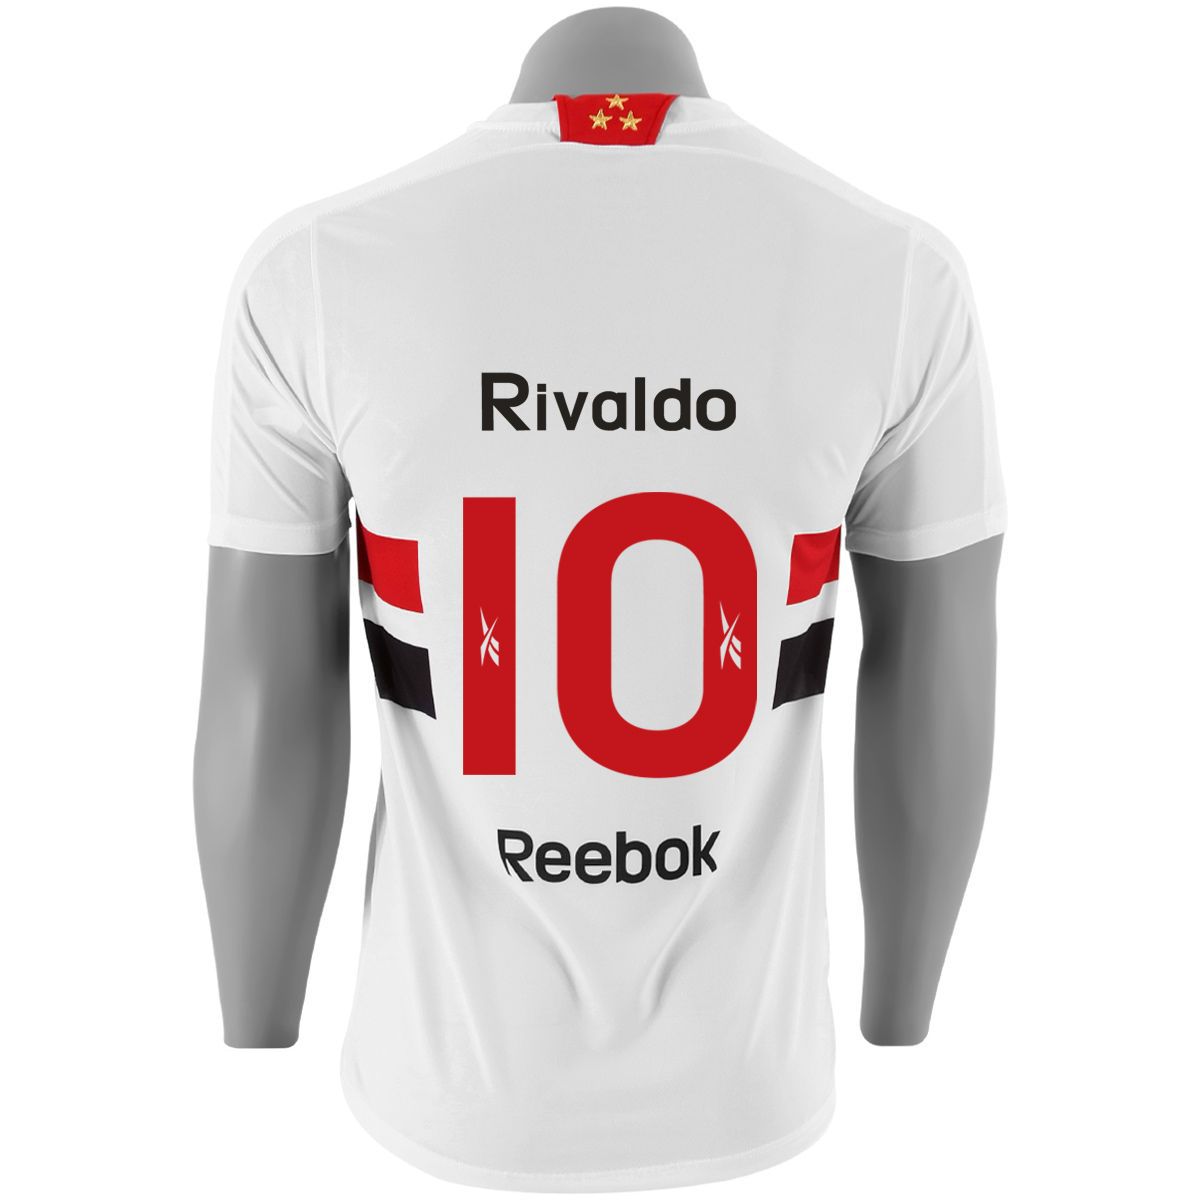 2011 Sao Paulo Rivaldo Home Jersey Reebok Soccer Jersey